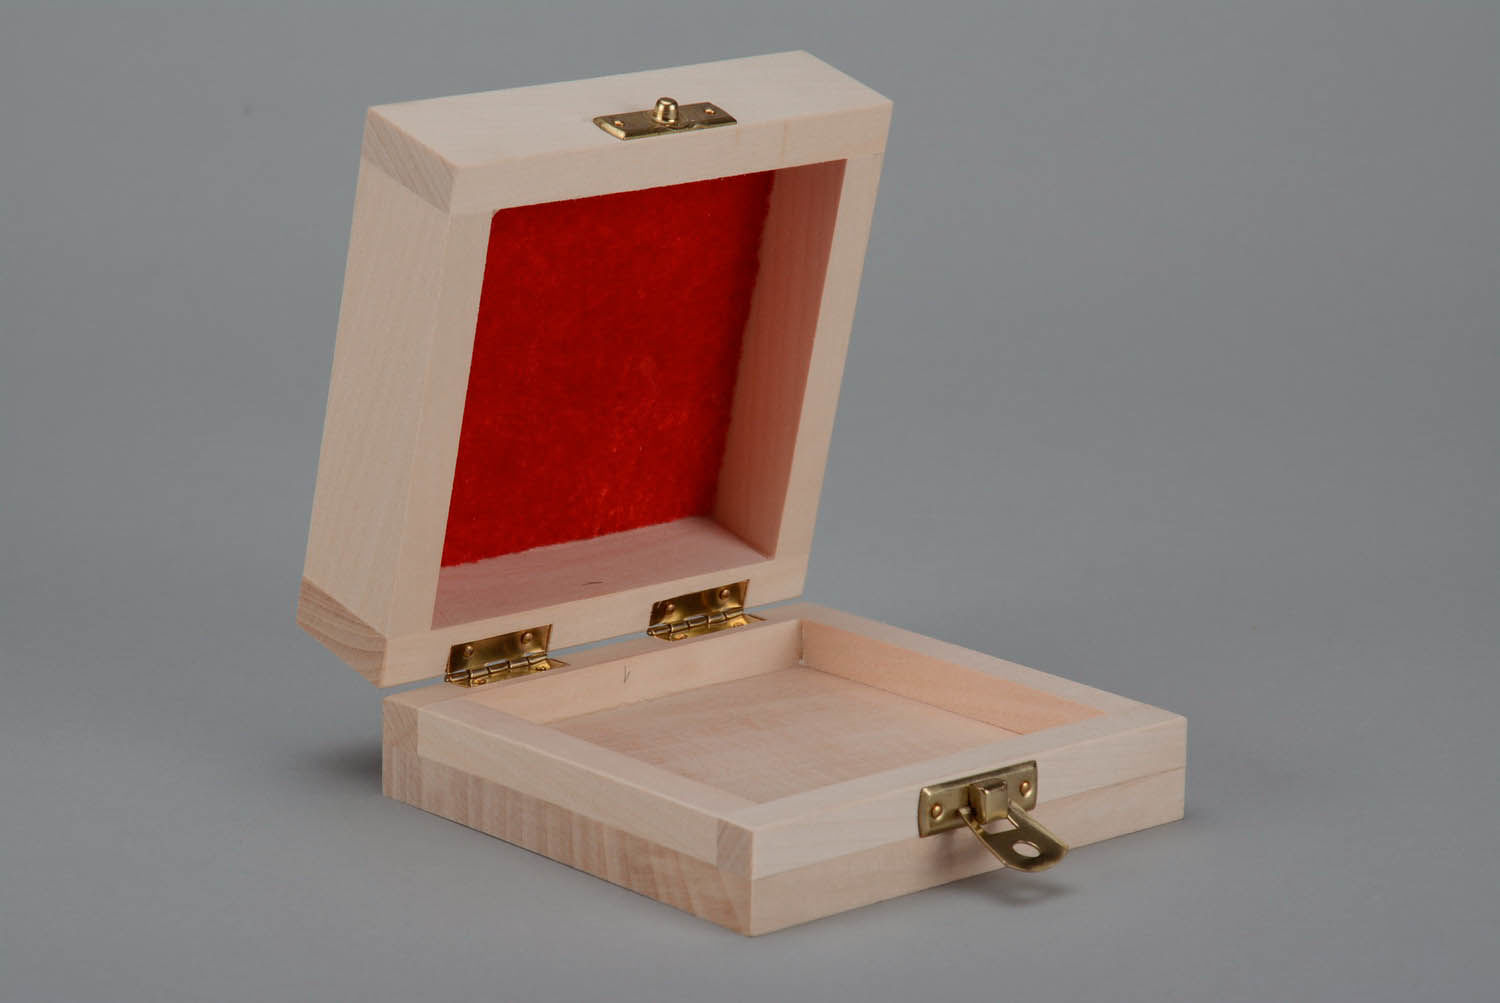 Caja de madera con acabado de terciopelo por dentro foto 4